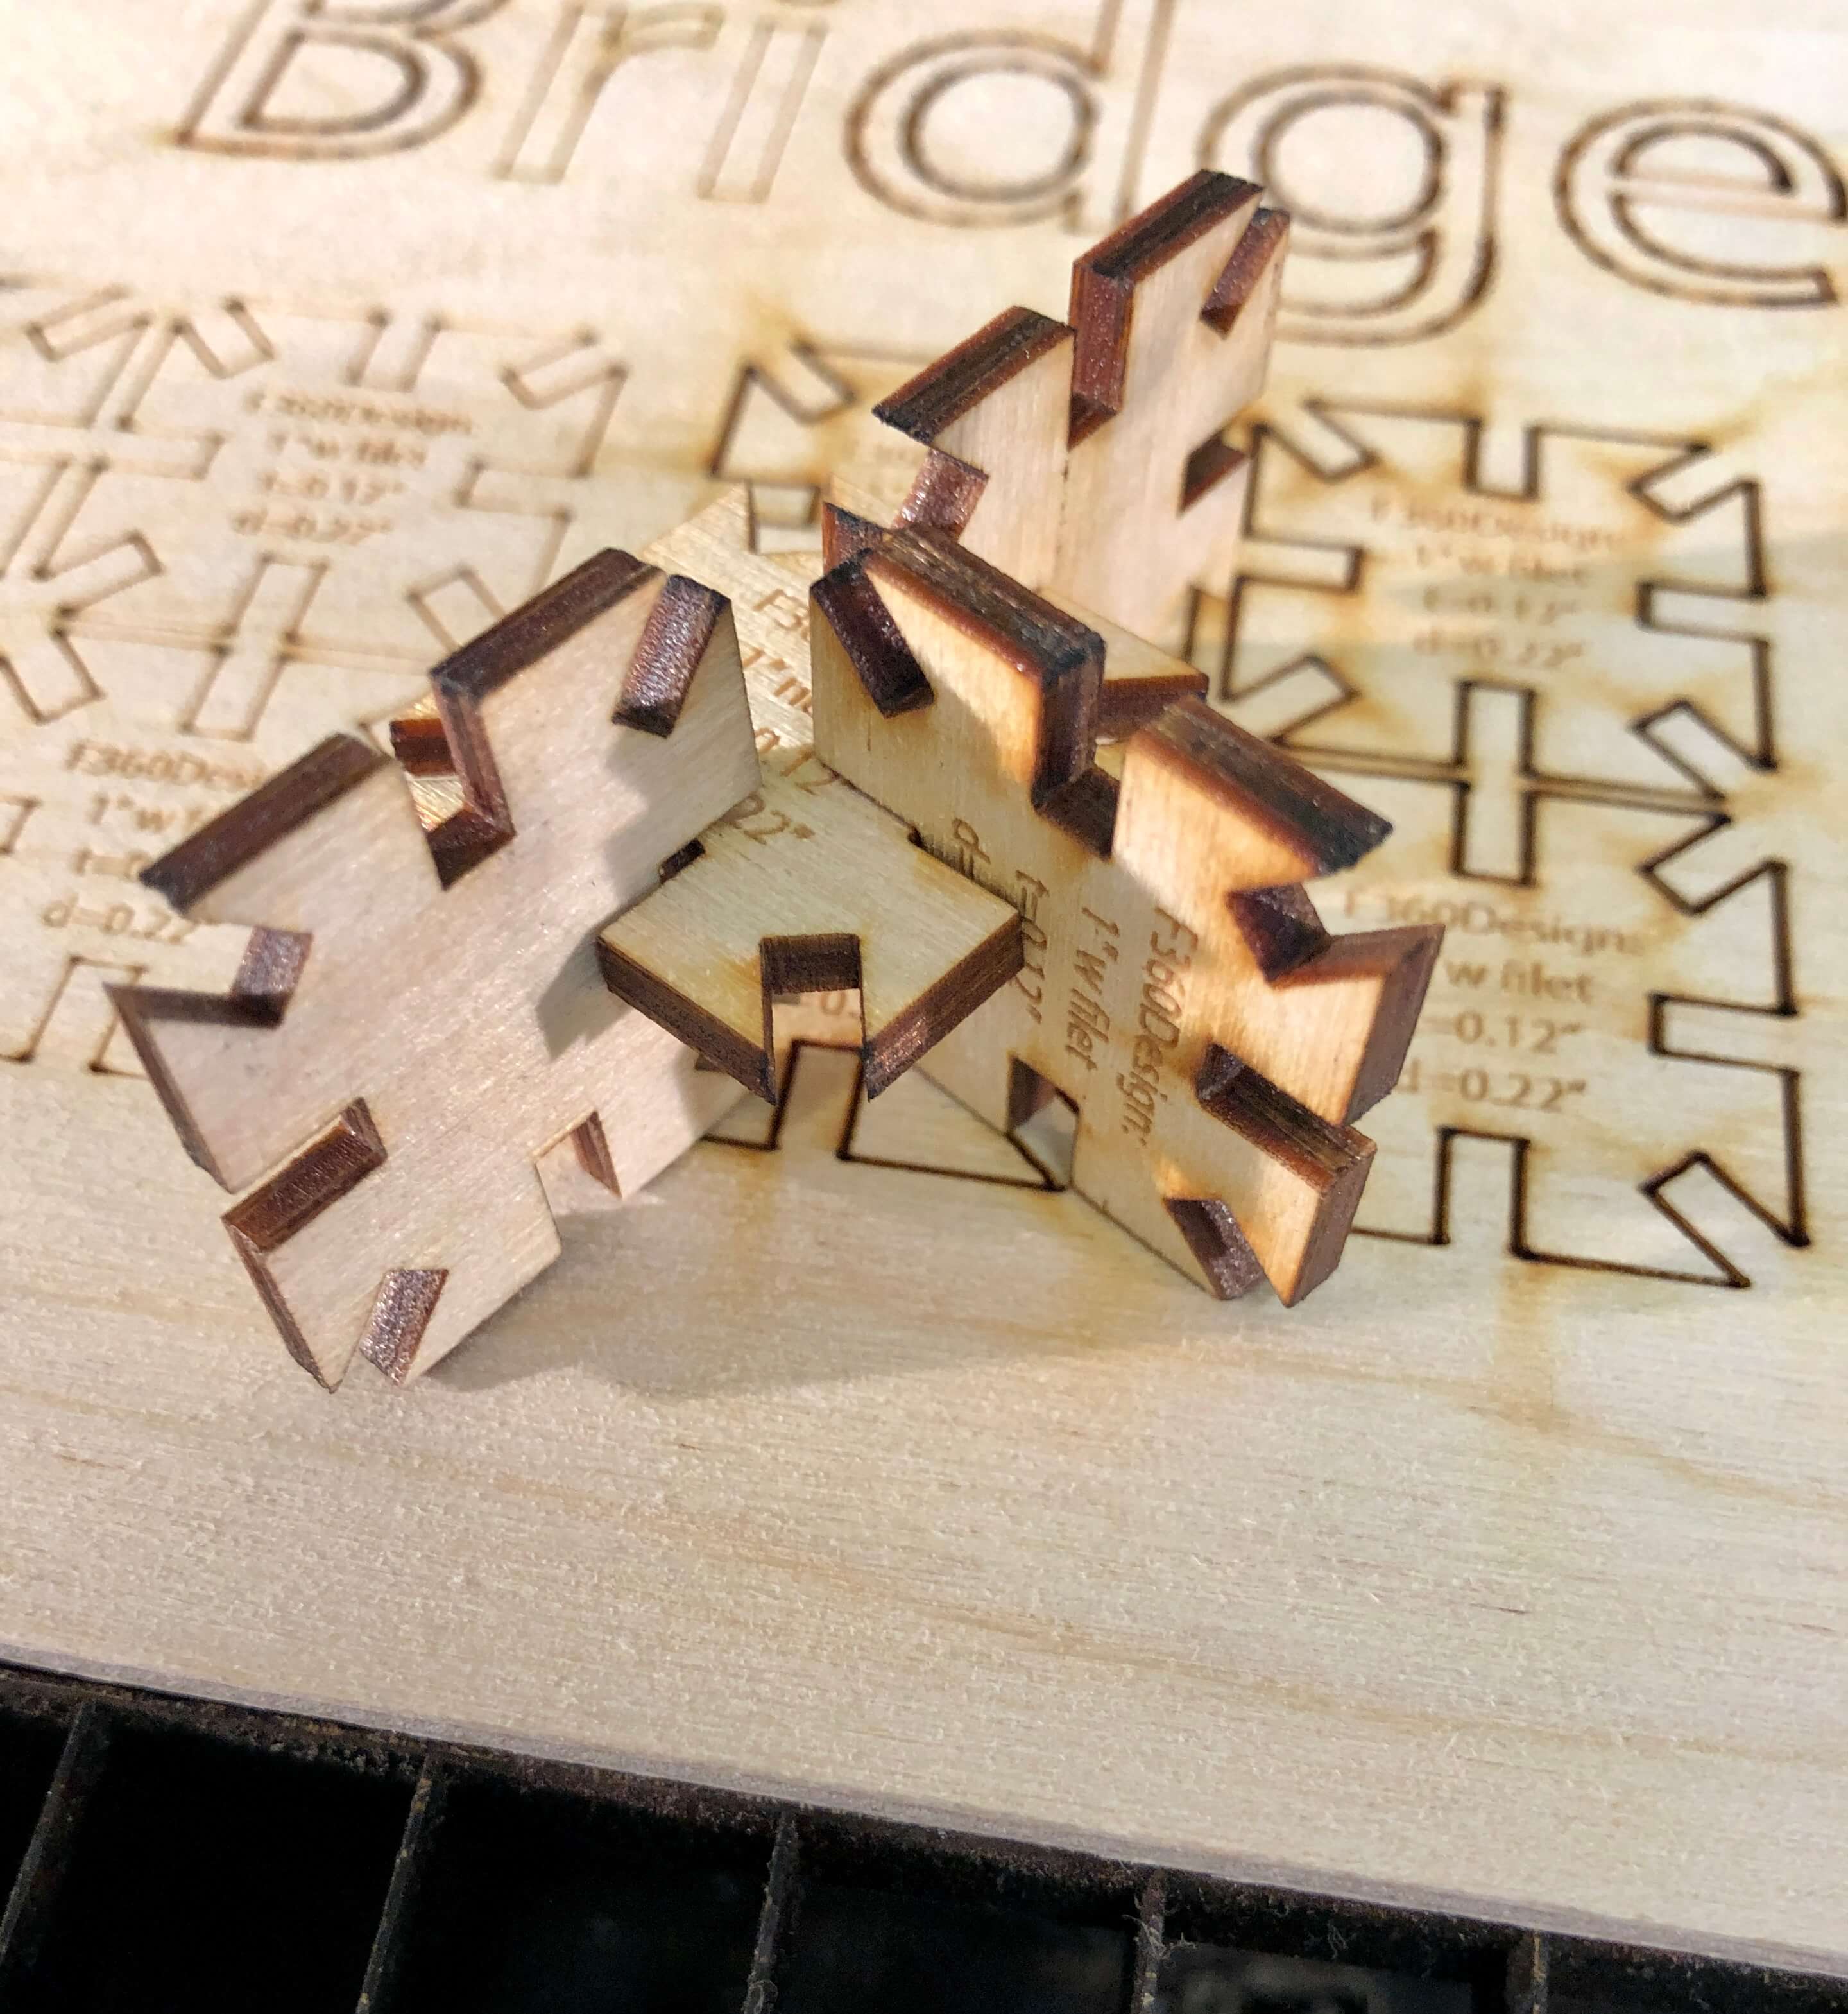 assembled laser cut notch blocks on plywood